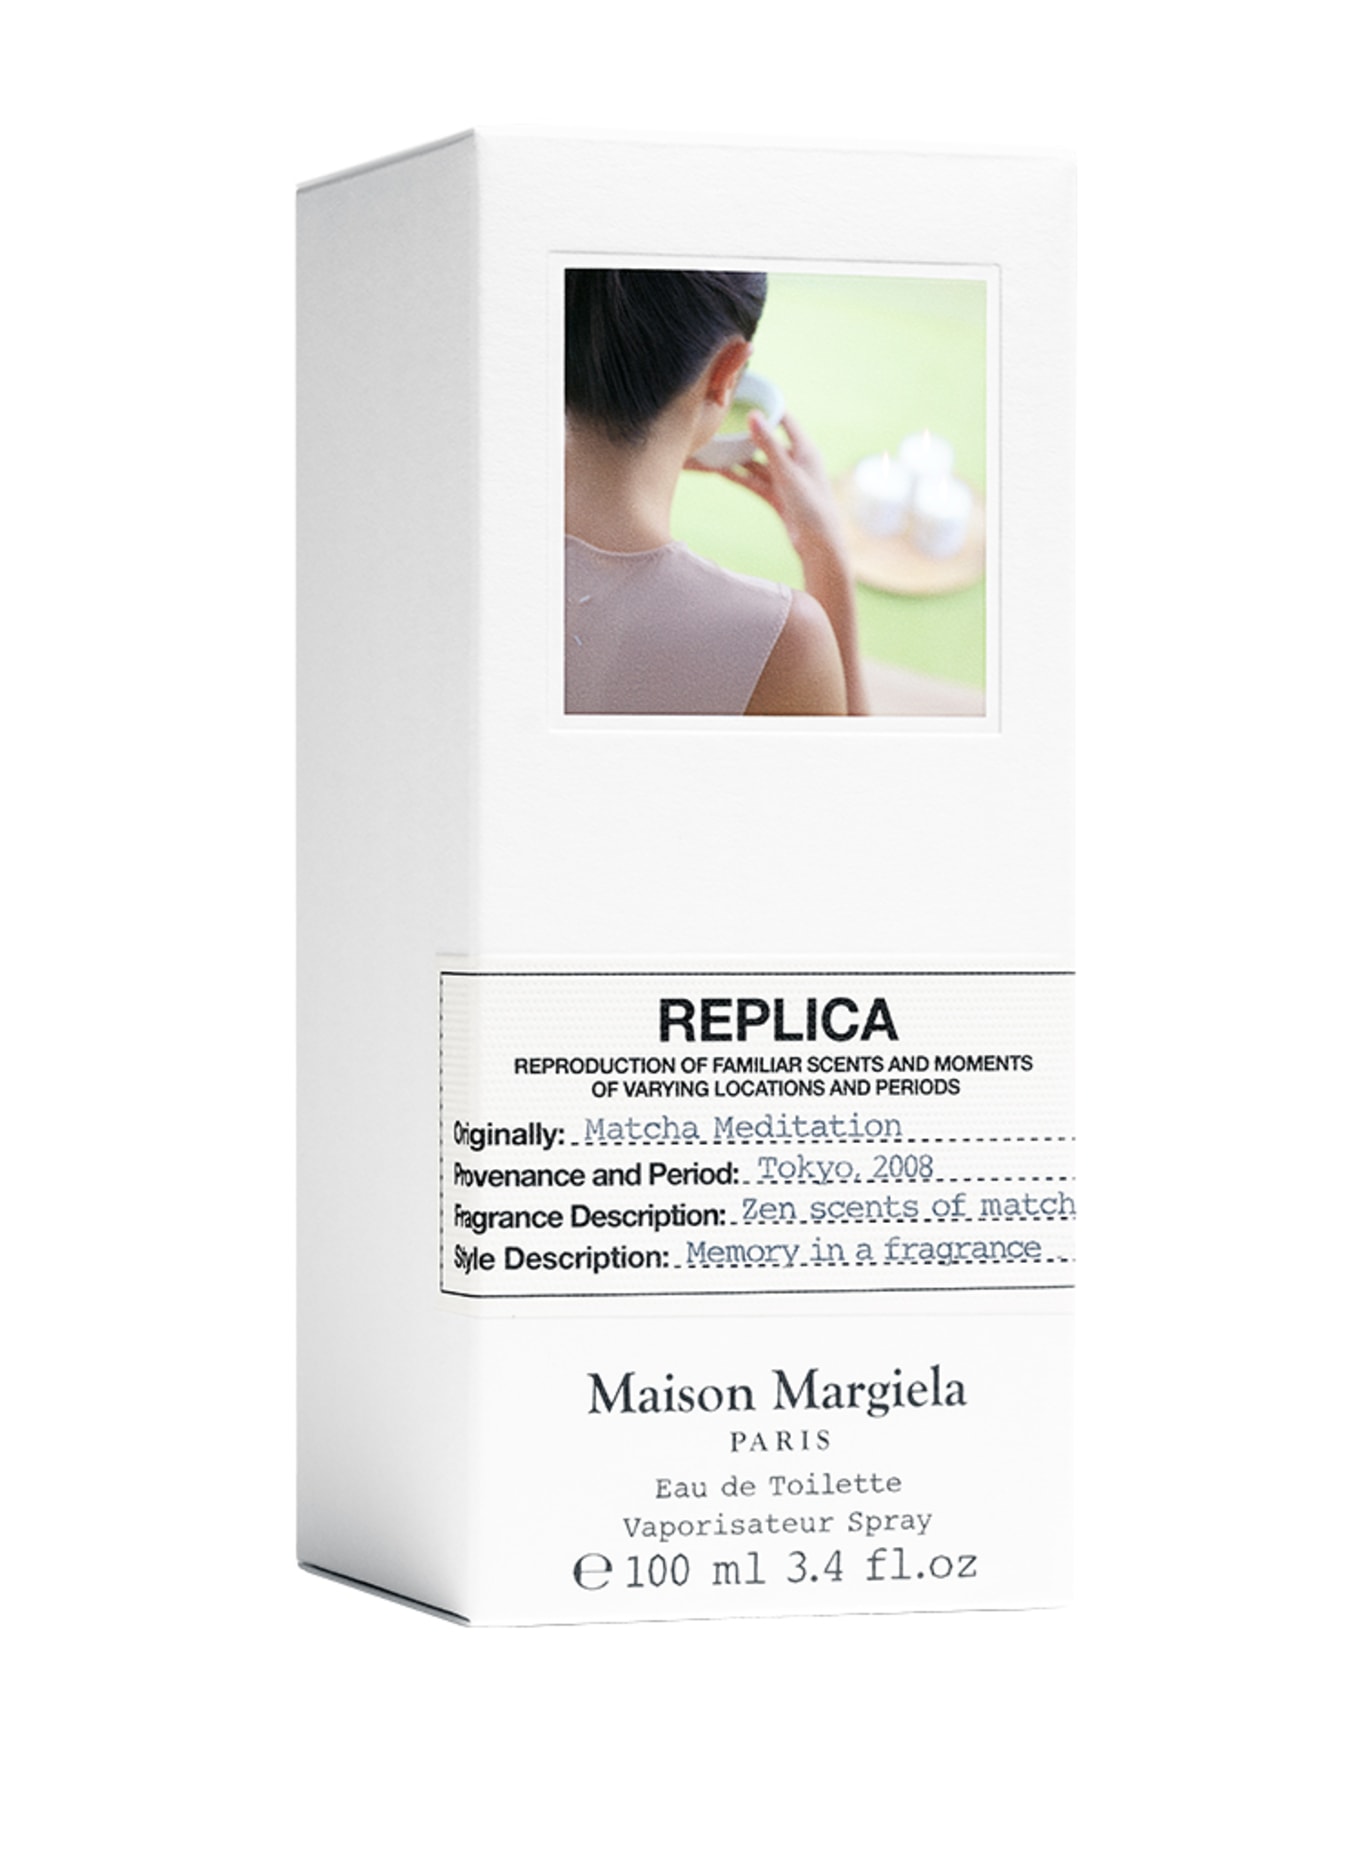 Maison Margiela Fragrances REPLICA MATCHA MEDITATION (Bild 2)